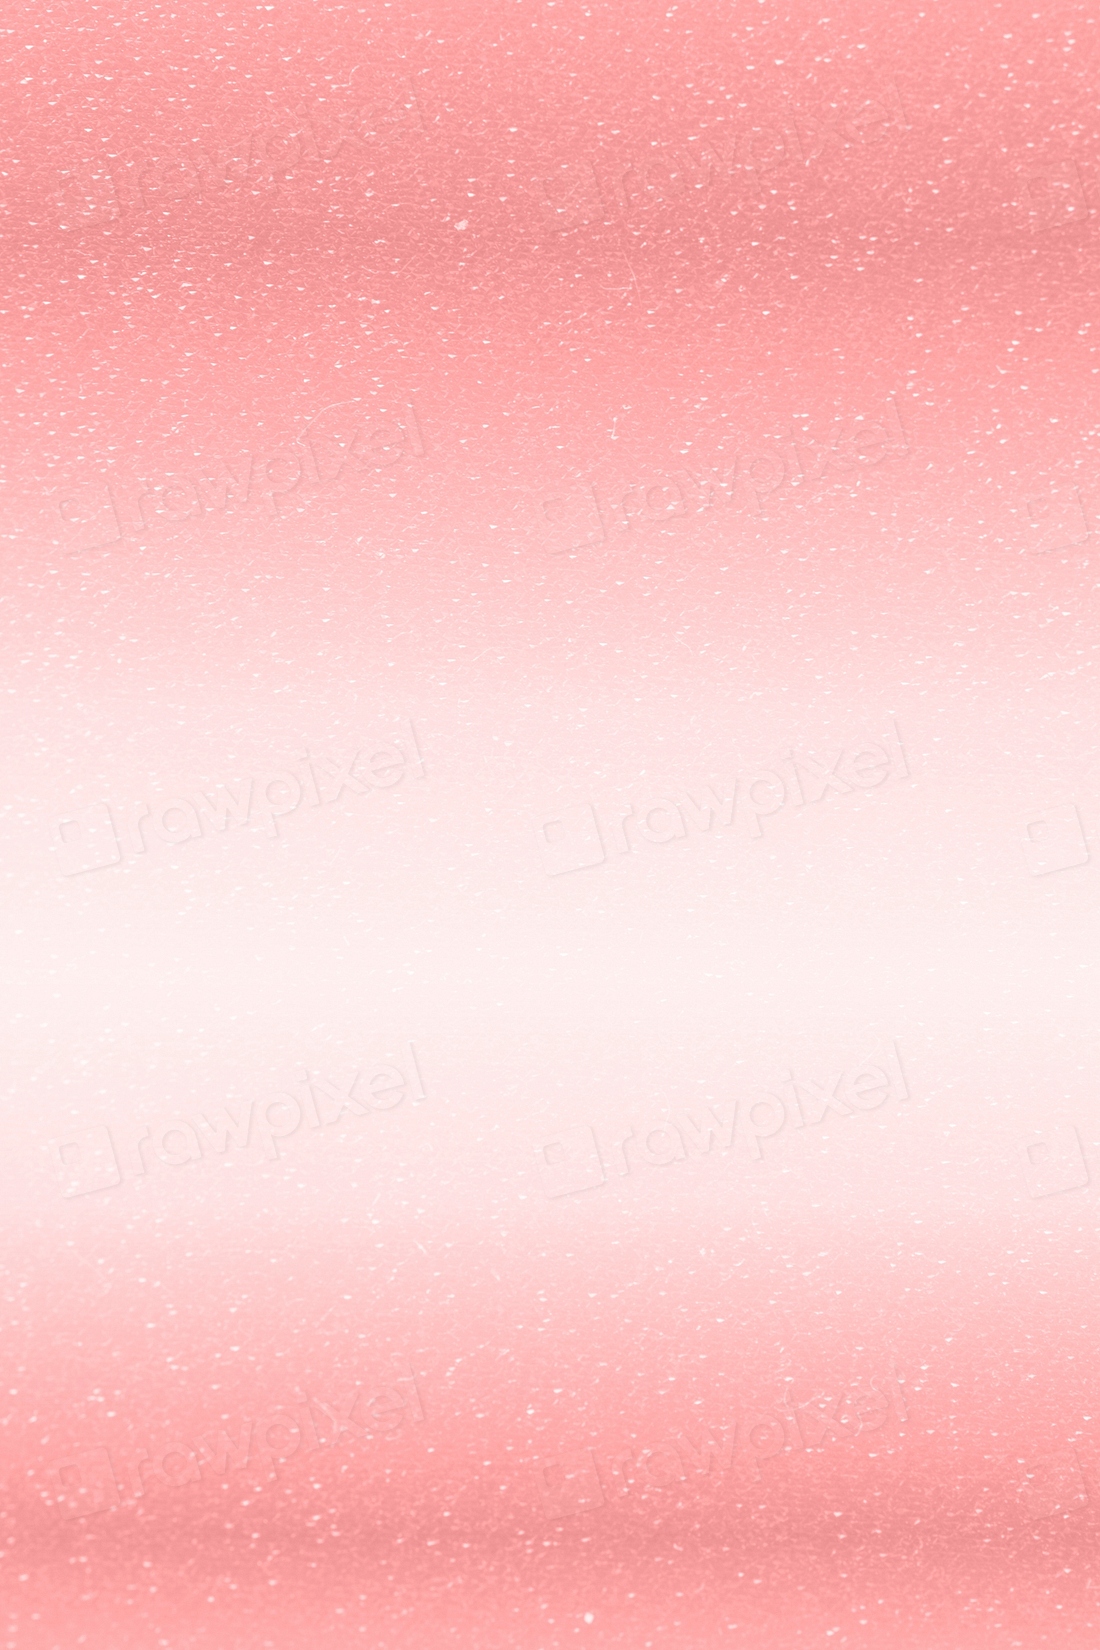 Gradient rose pink color textured | Premium Photo - rawpixel